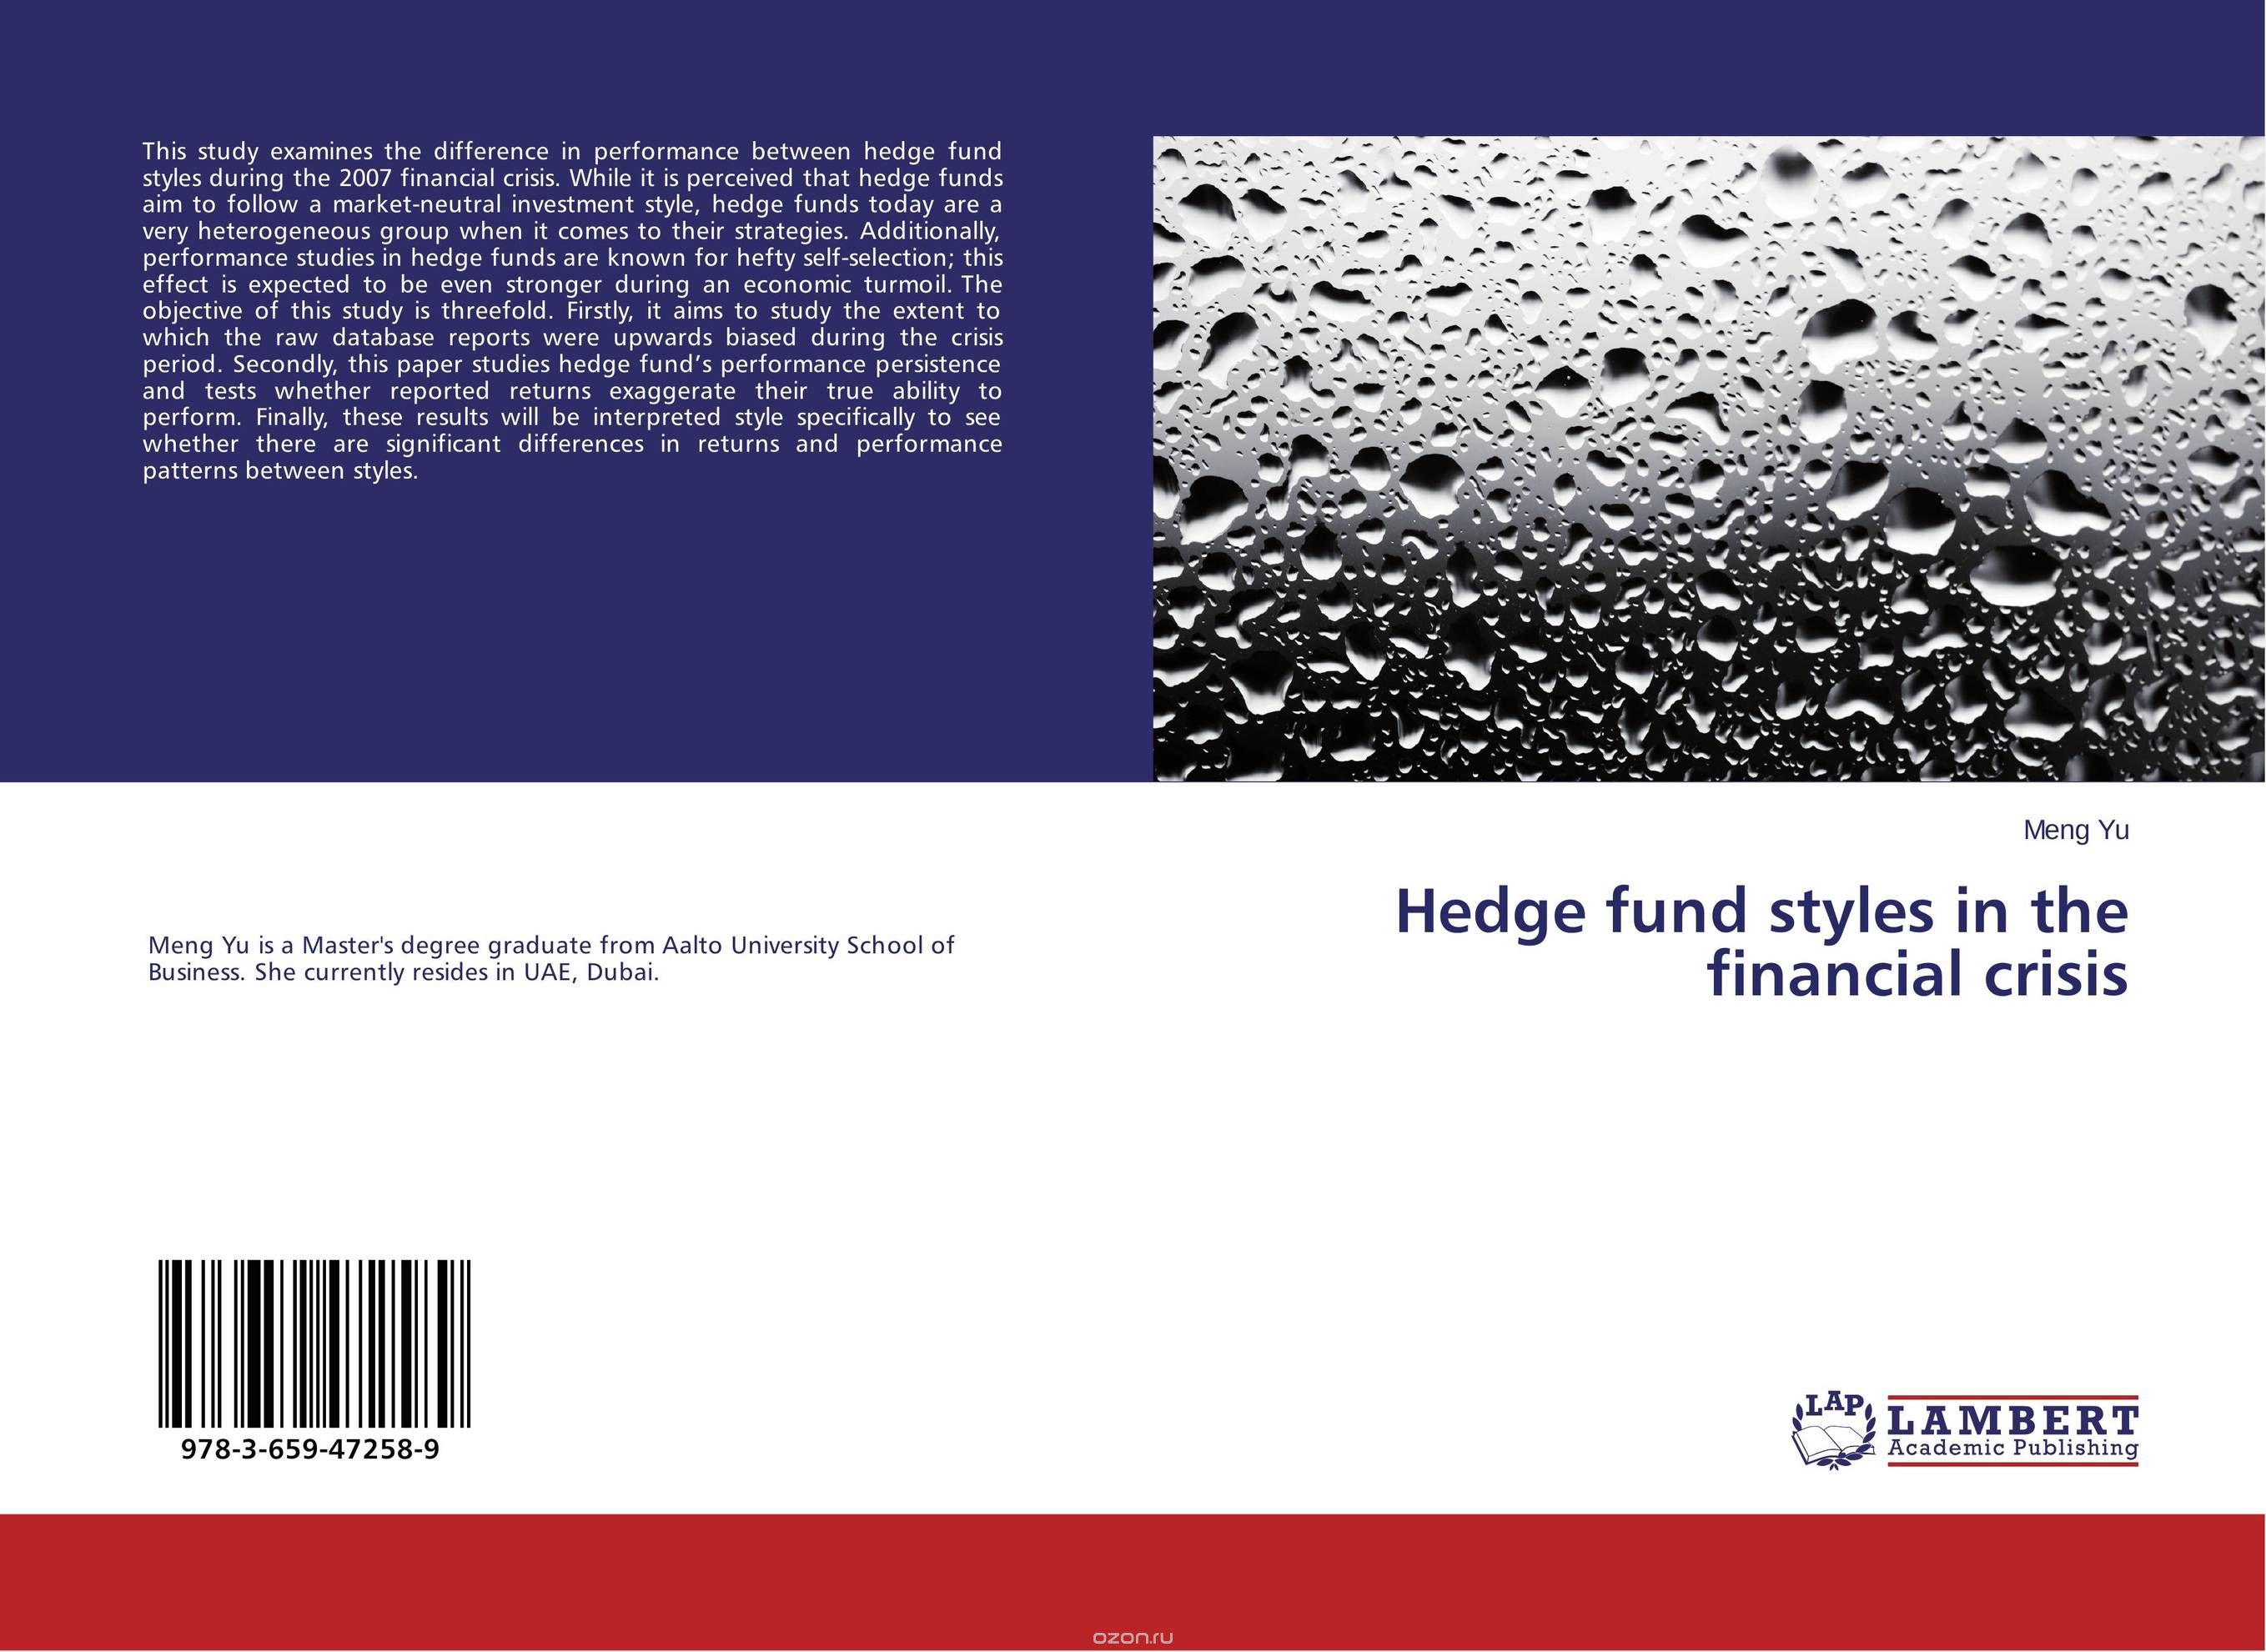 Скачать книгу "Hedge fund styles in the financial crisis"